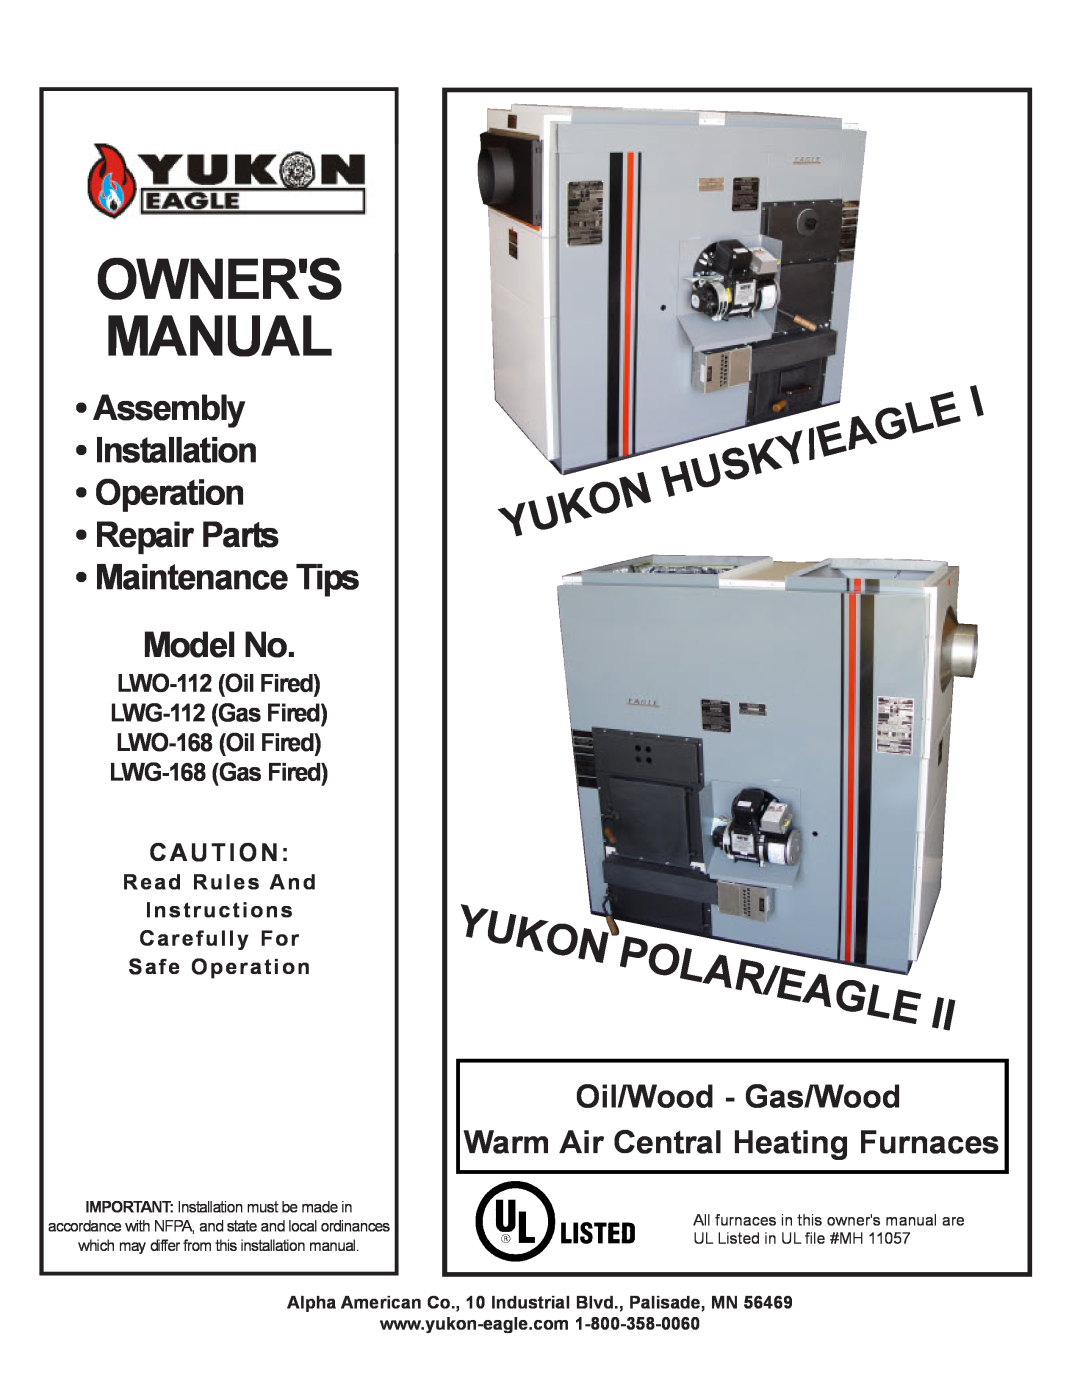 Yukon Advanced Optics Oil Furnace owner manual Polar/Eagle, Oil/Wood - Gas/Wood, Warm Air Central Heating Furnaces, Yukon 